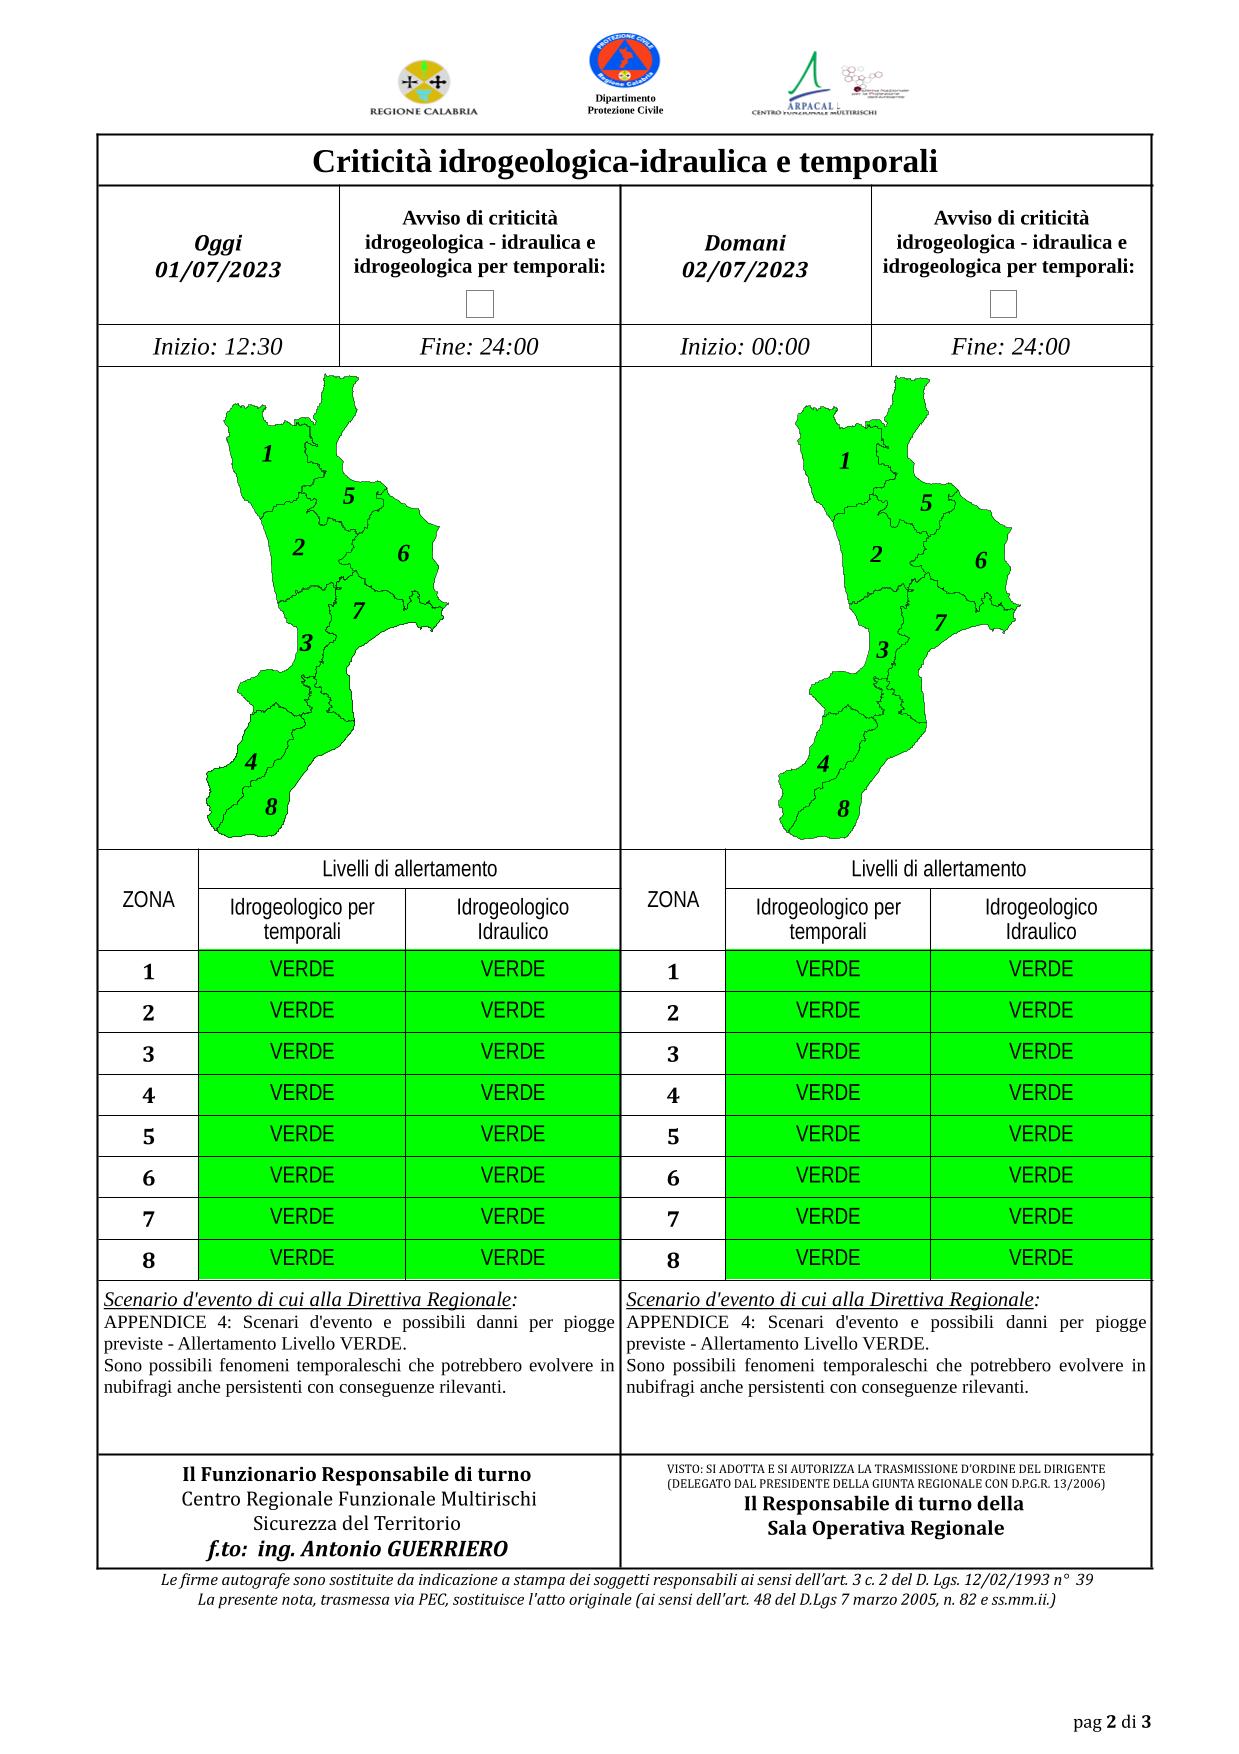 Criticità idrogeologica-idraulica e temporali in Calabria 01-07-2023